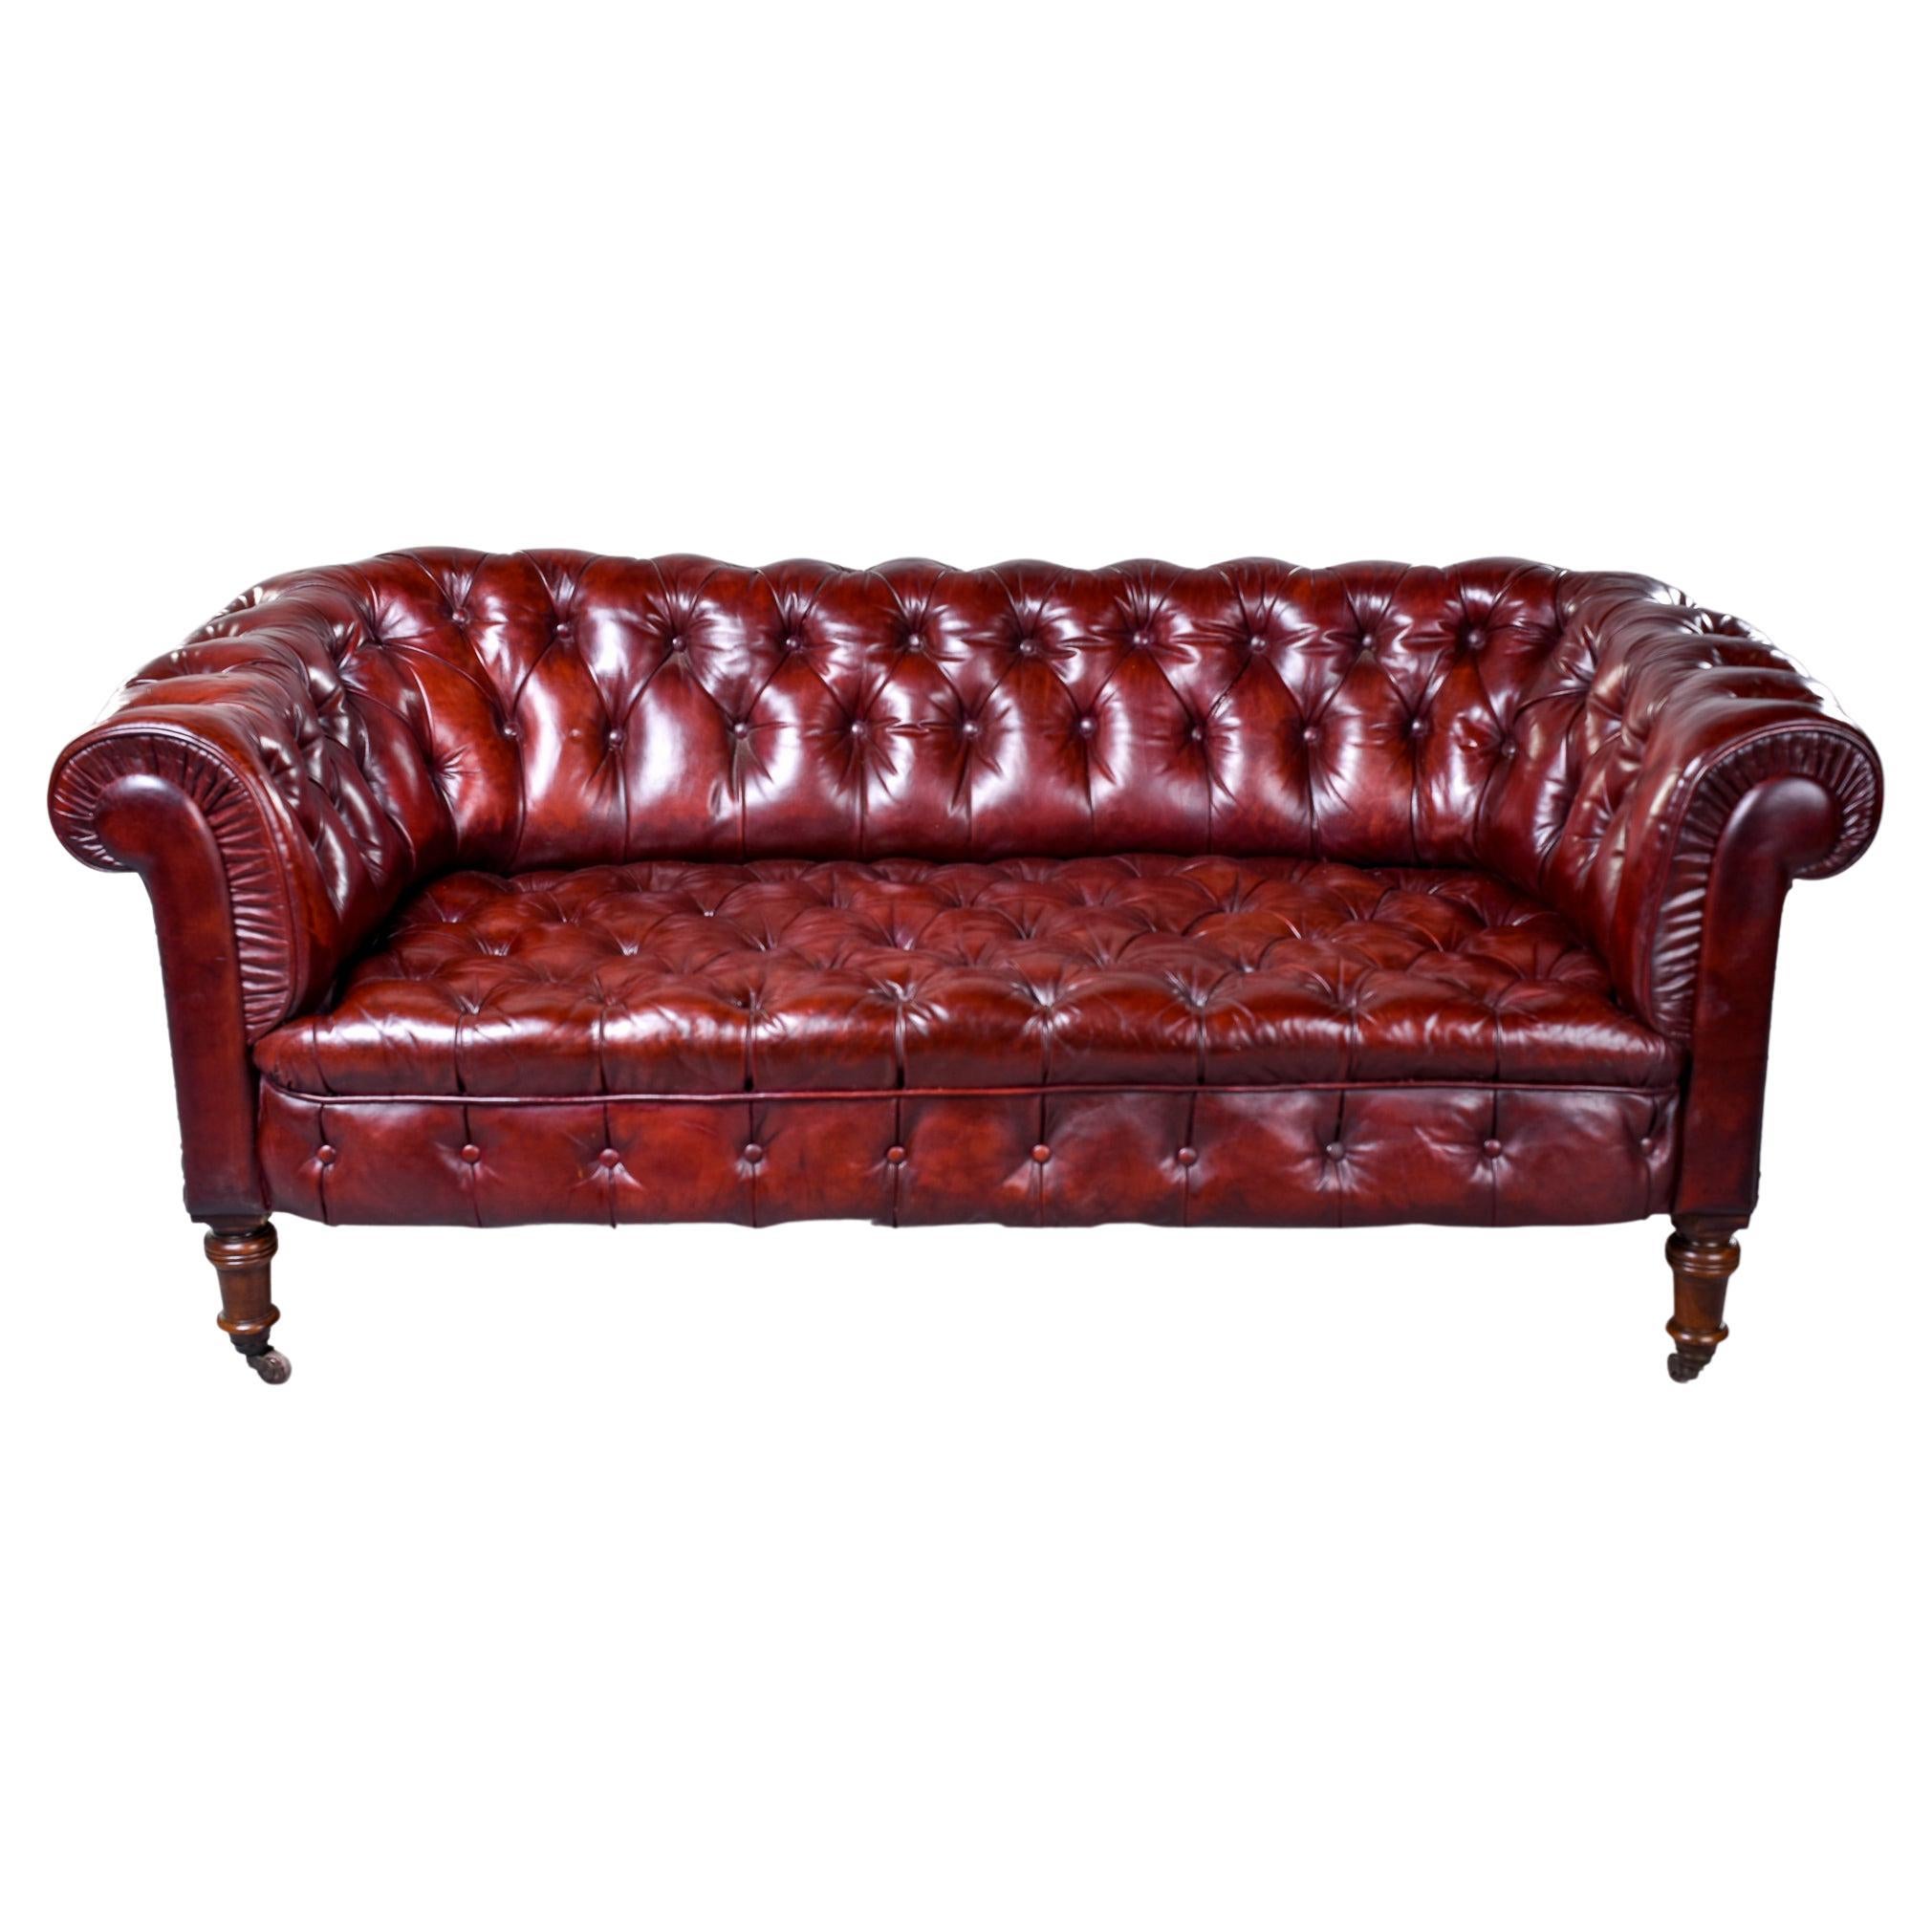 Vintage English Cordovan Leather Chesterfield Sofa